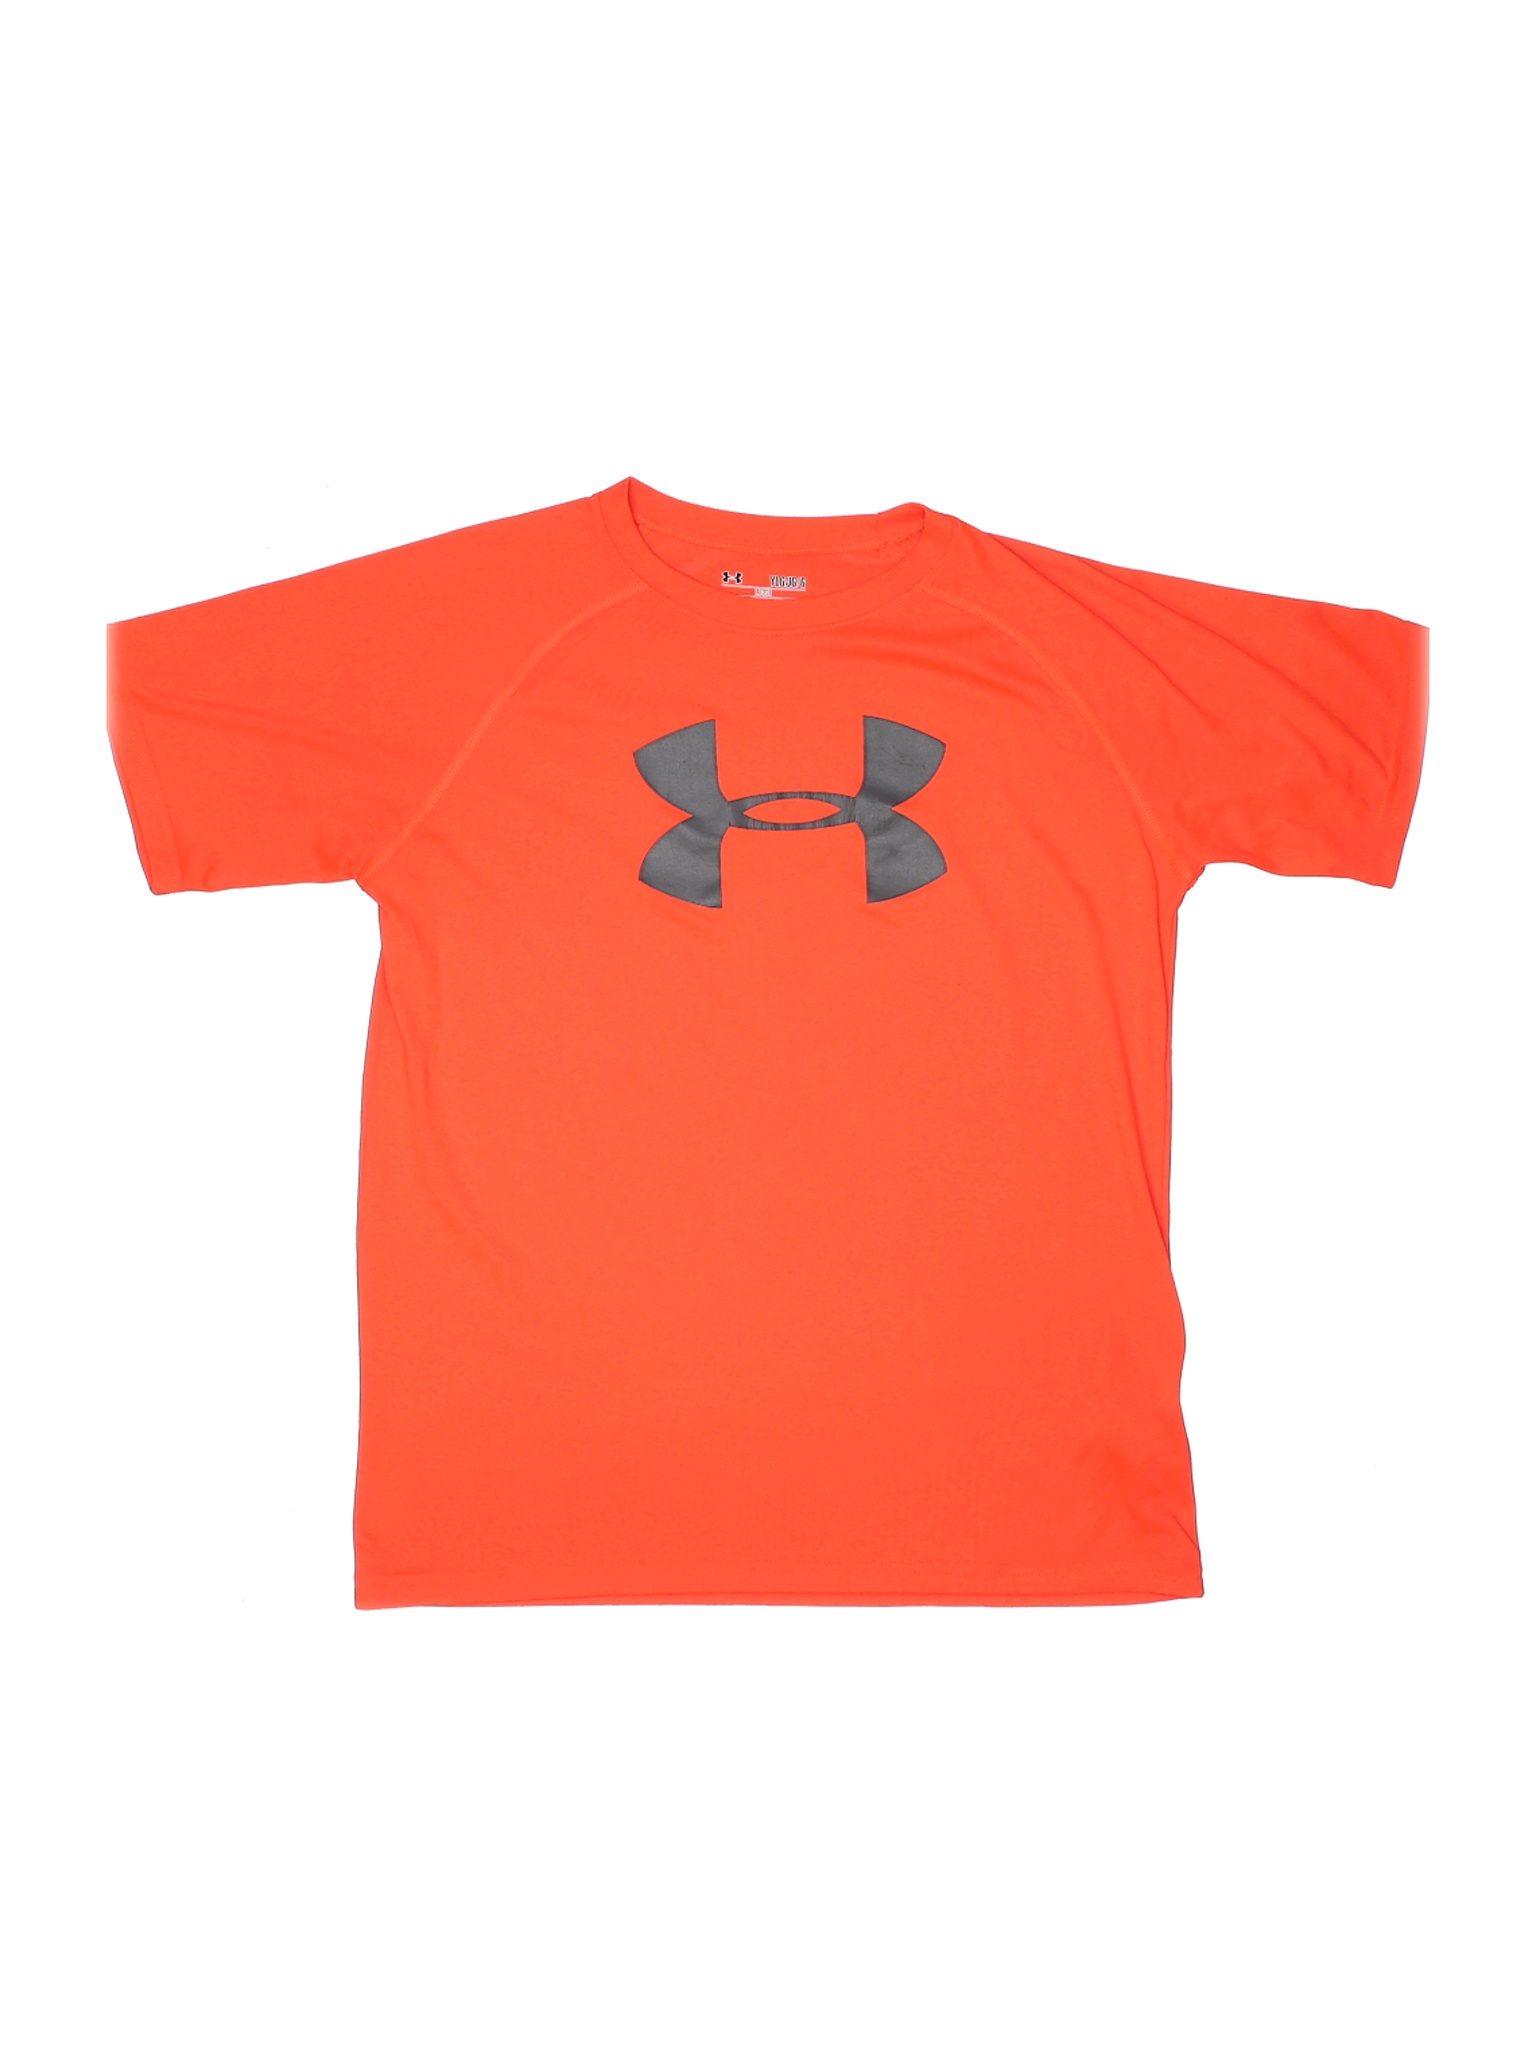 Heat Gear by Under Armour Boys Orange Active T-Shirt L Youth | eBay